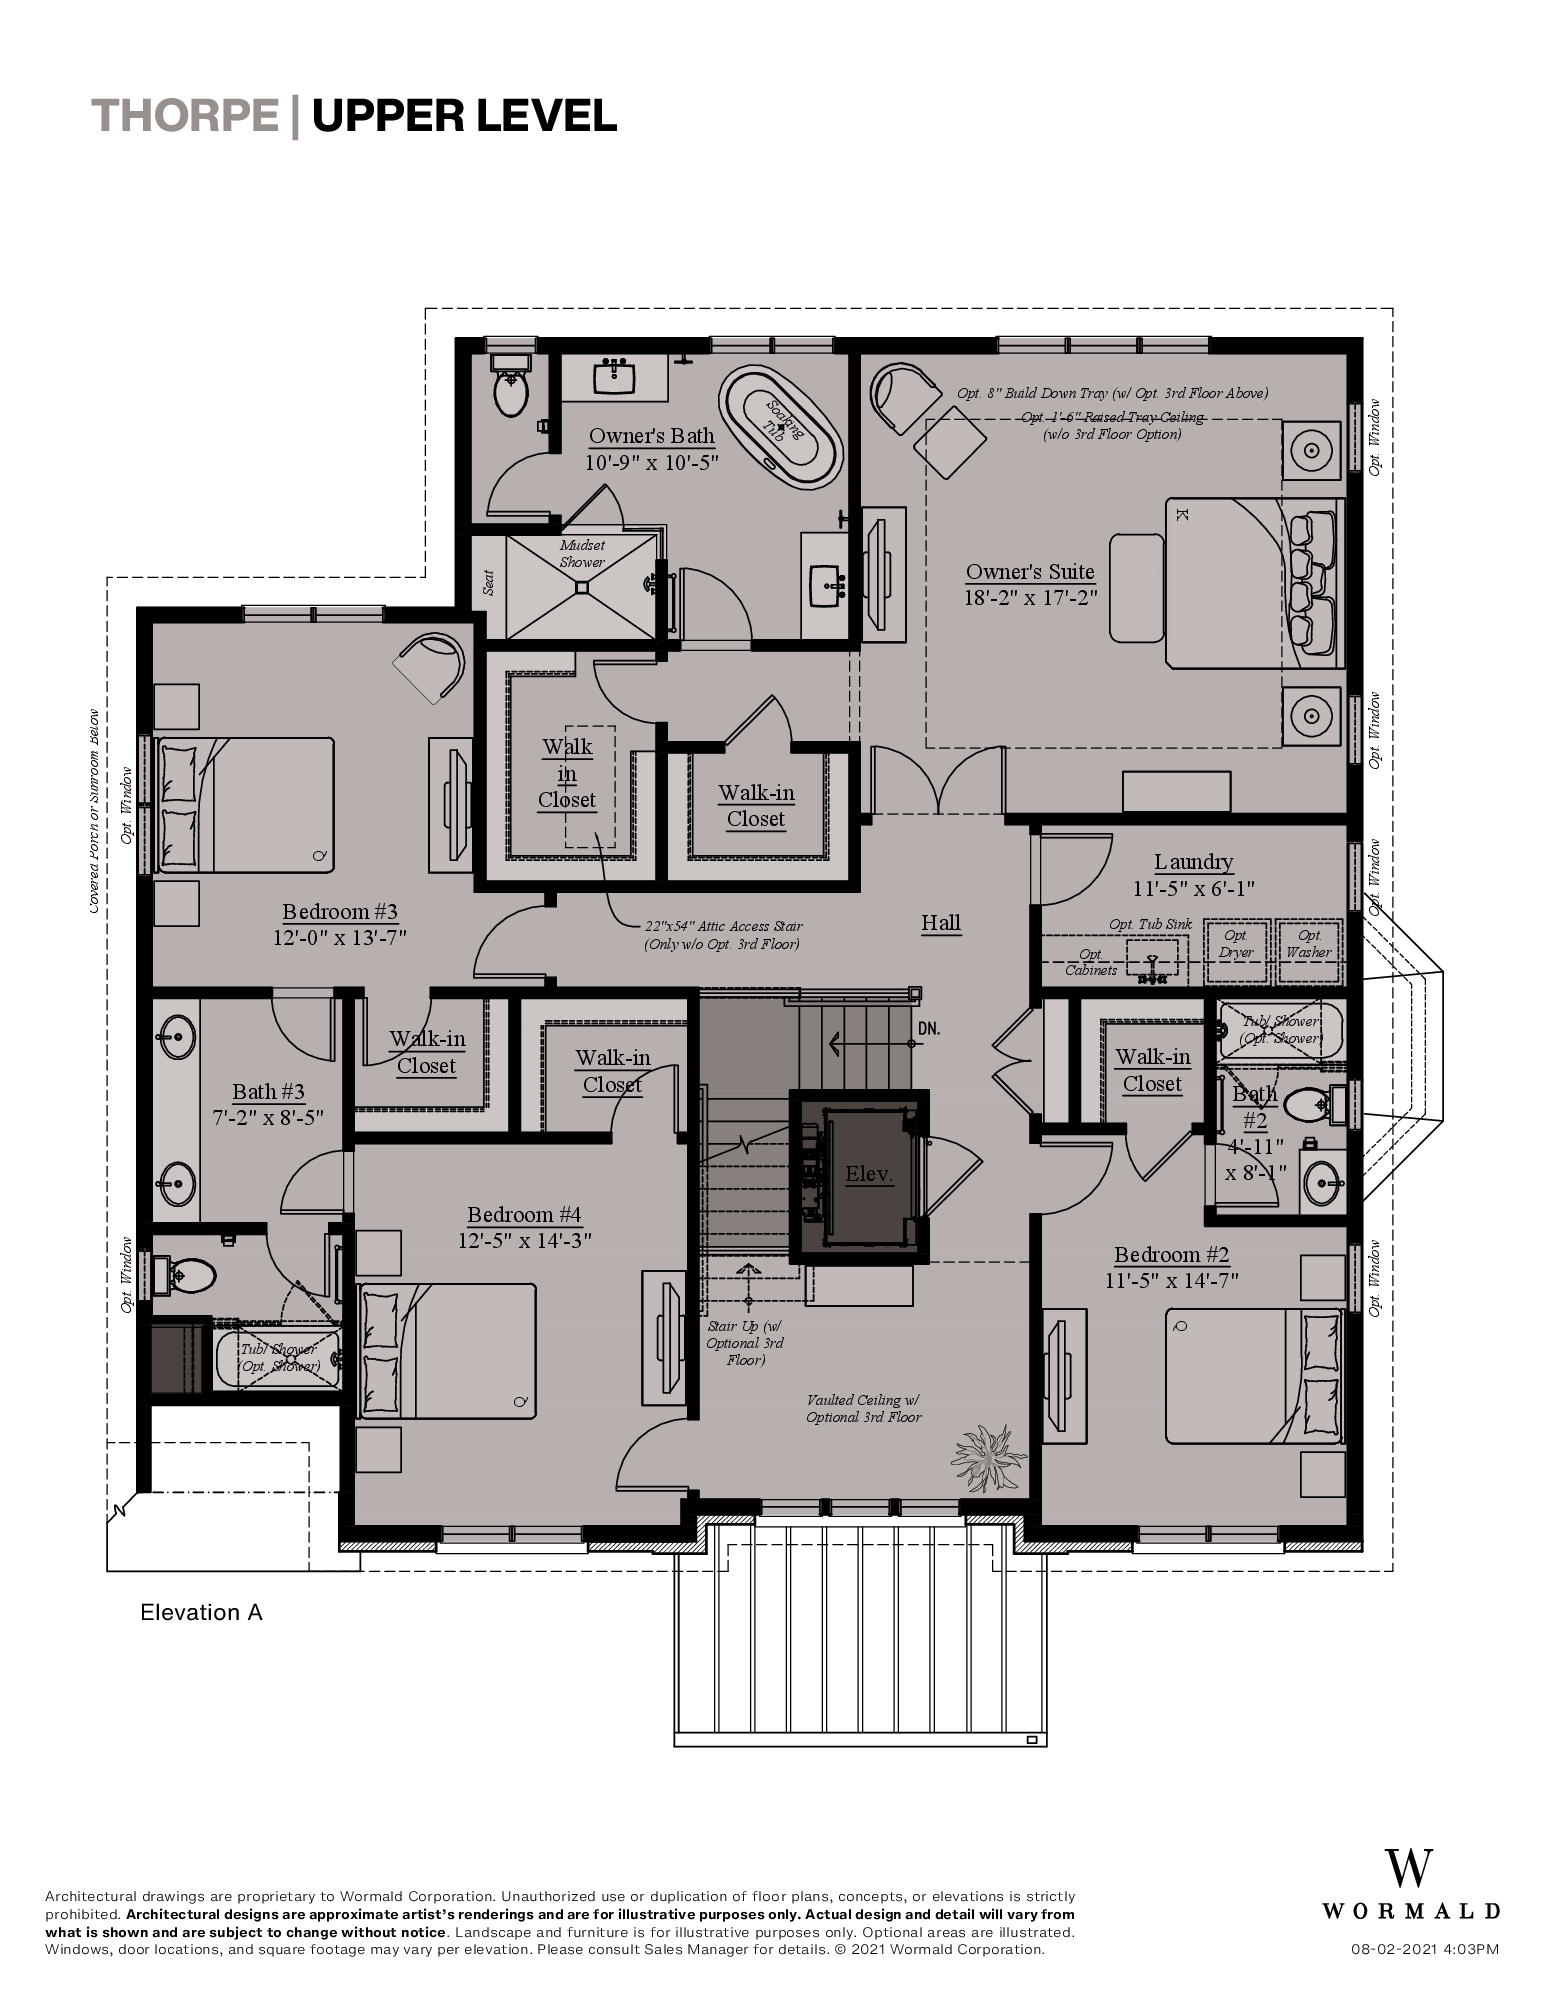 The Thorpe floor plan 1